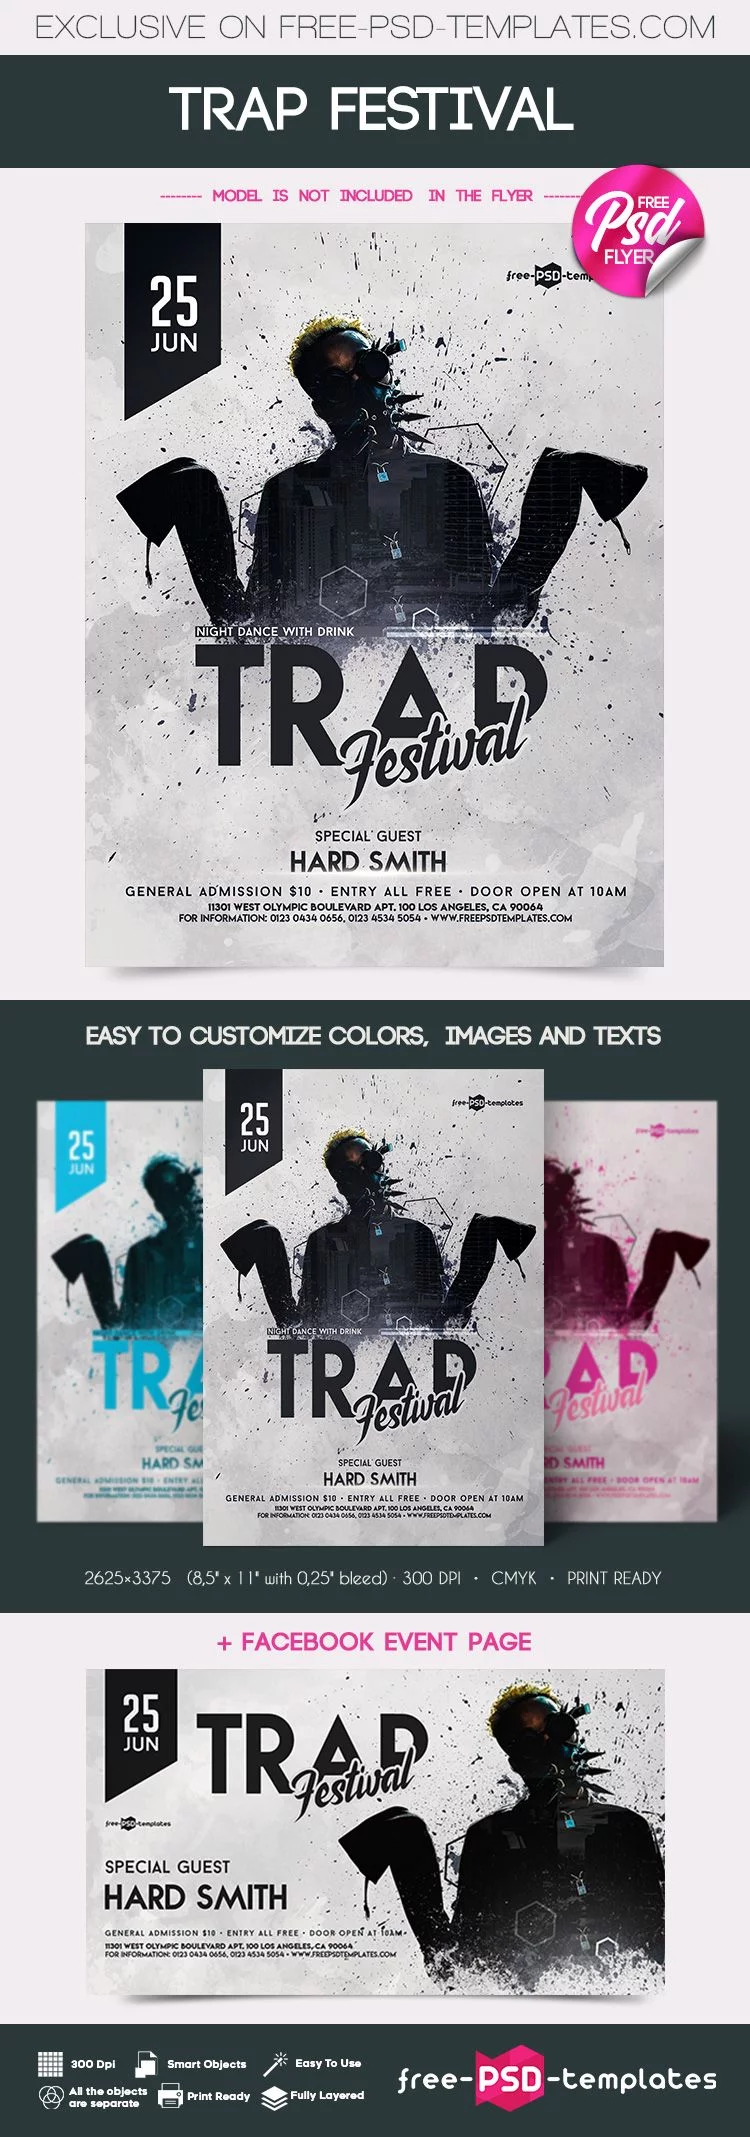 Free Trap Festival Flyer in PSD